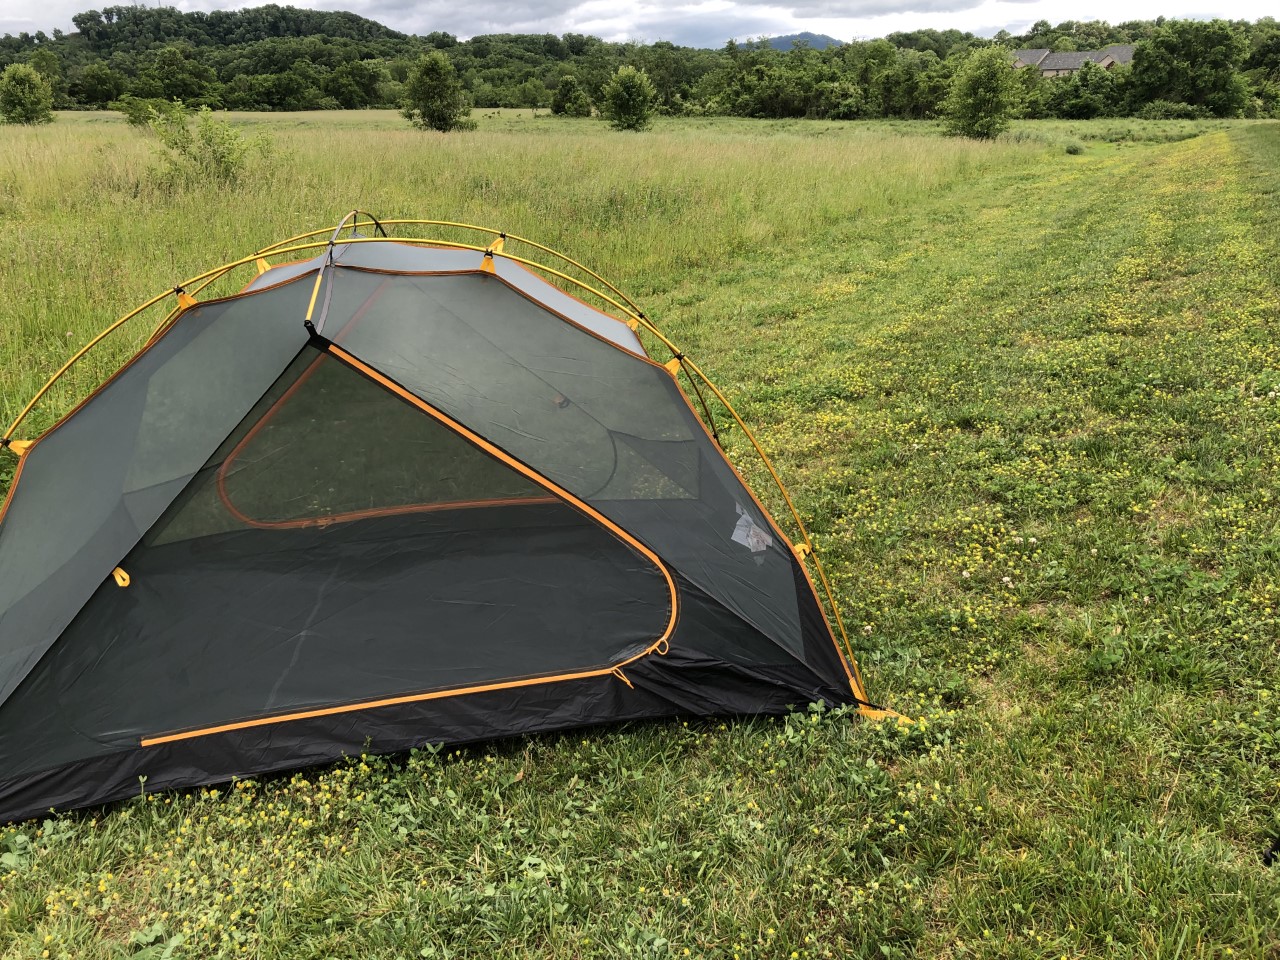 tent set up in open field